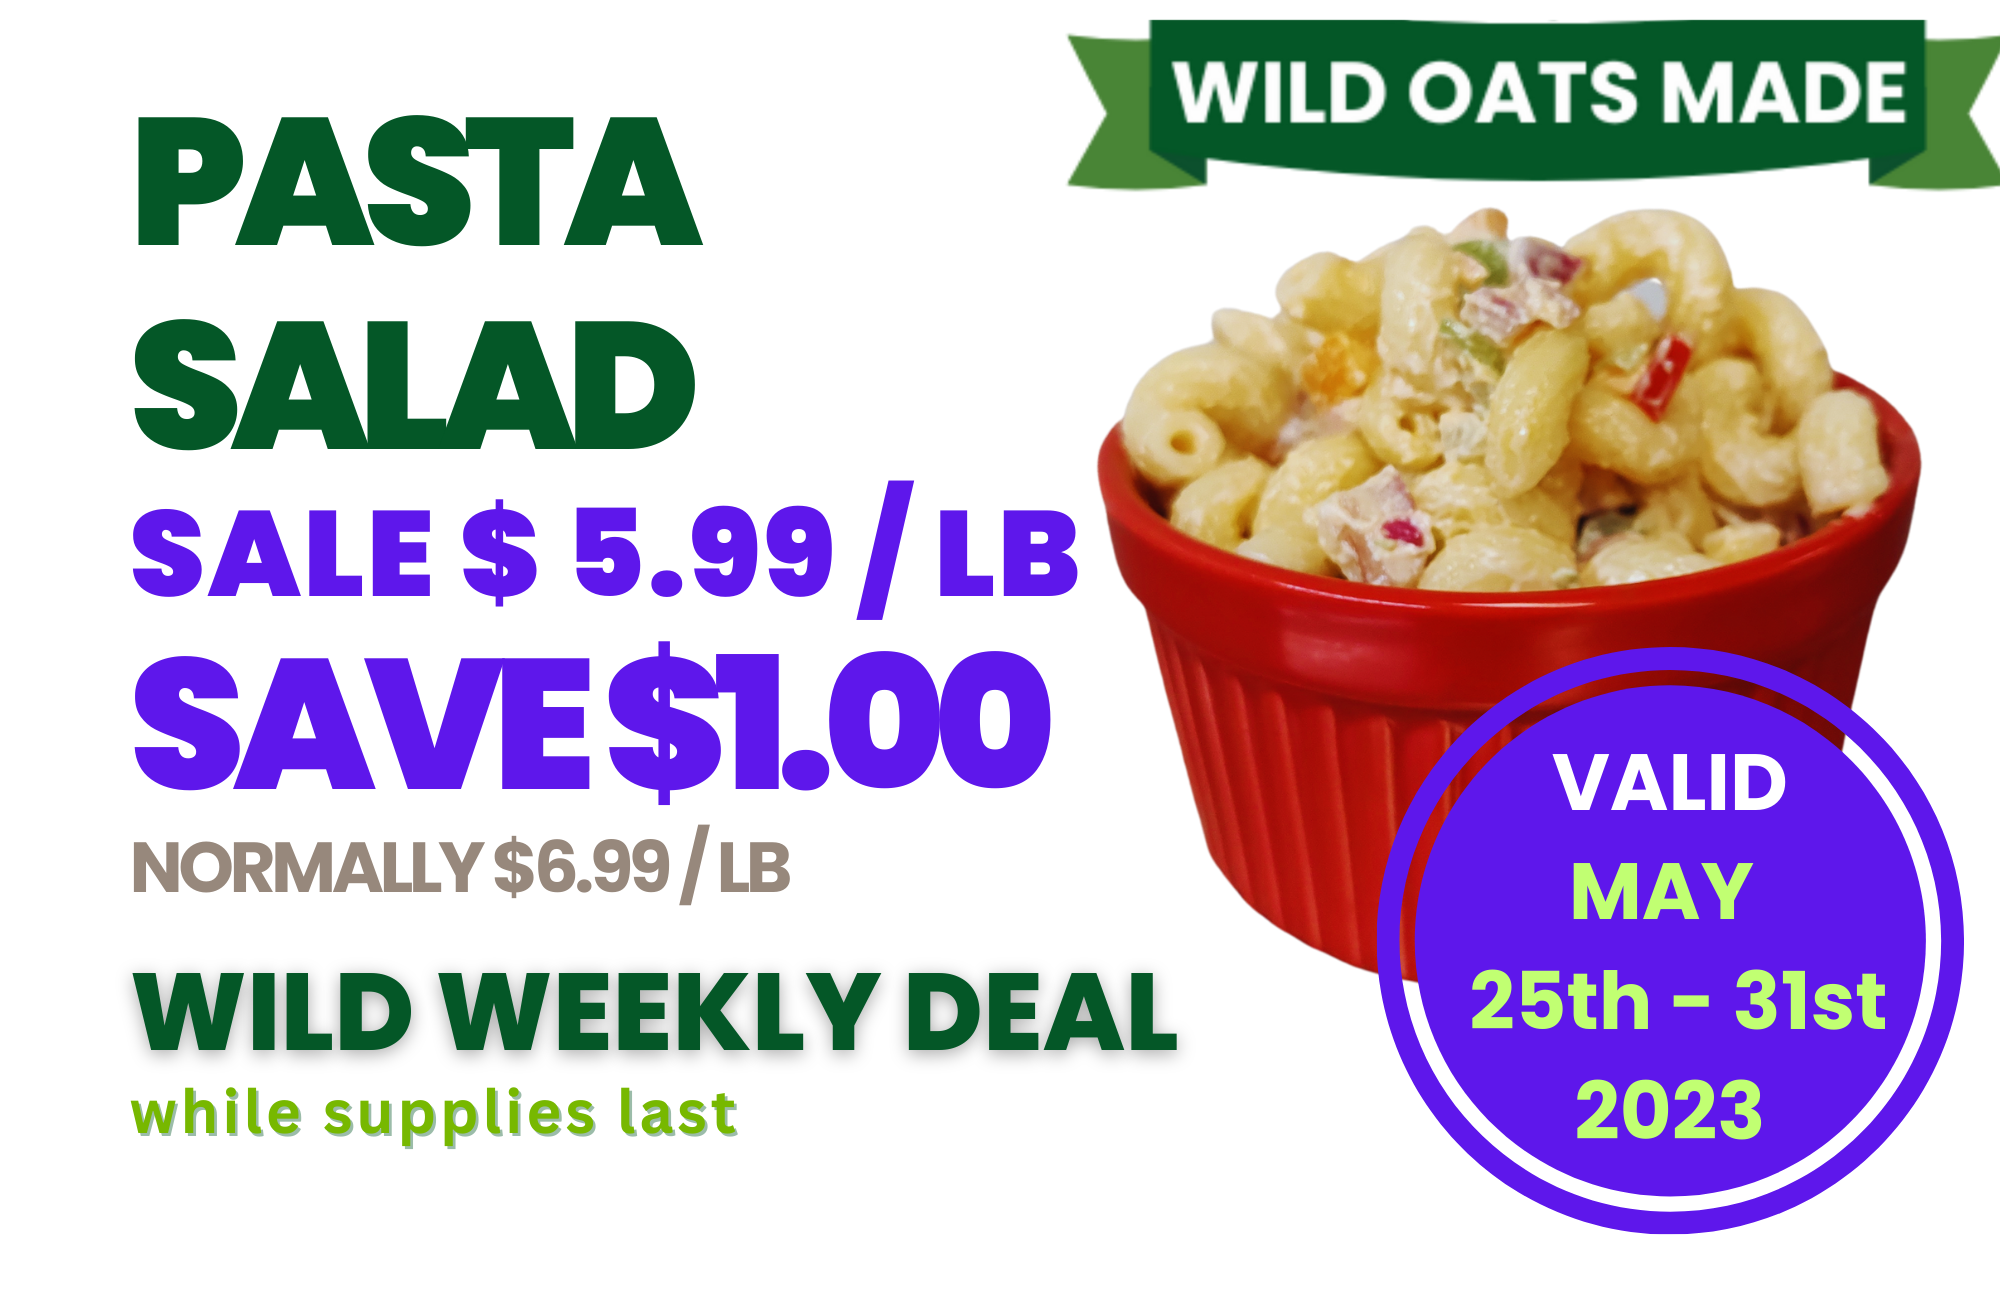 2023-0525-0531 Wild Weekend Deals House Made Pasta Salad.png